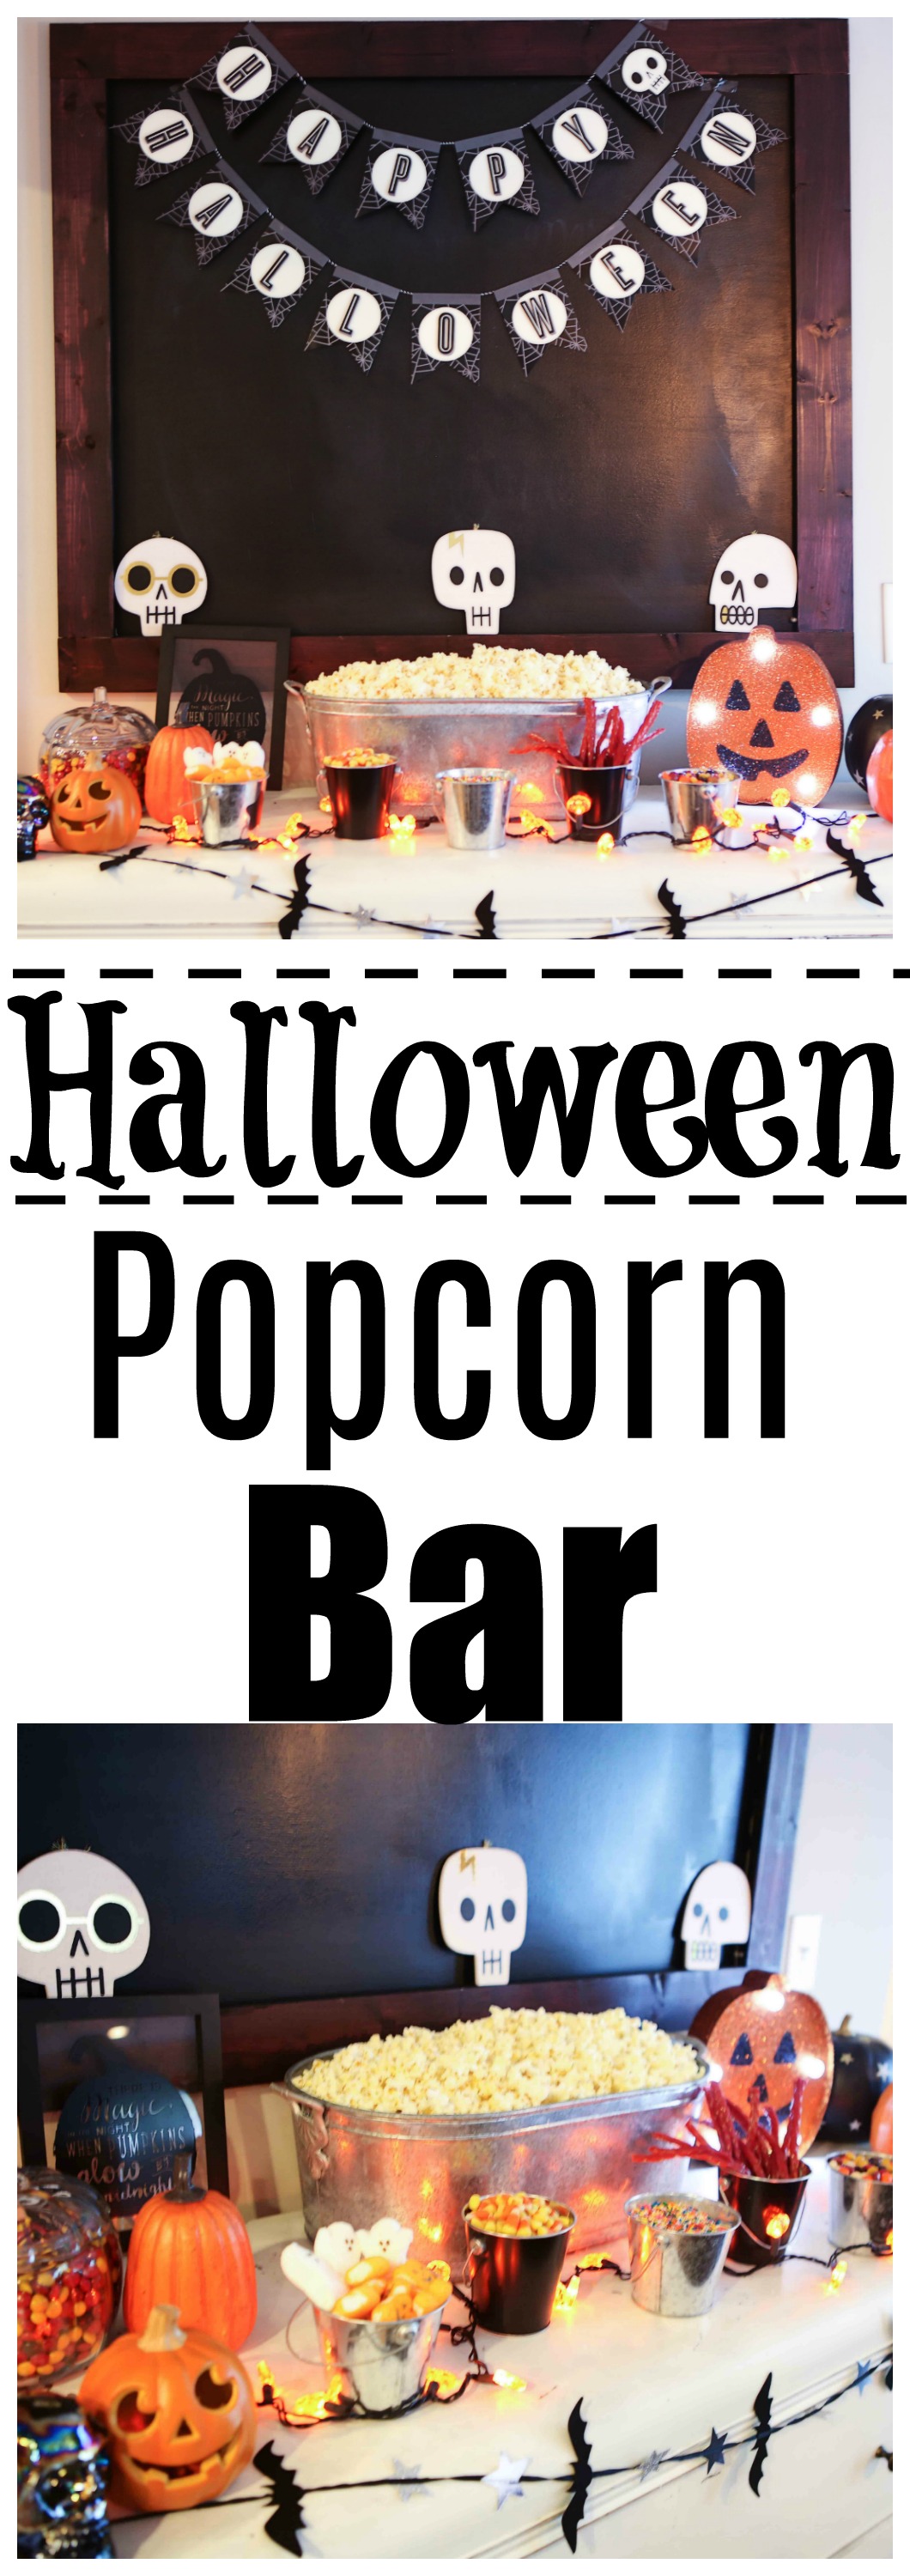 halloweenpopcornbar - Halloween Popcorn Bar by Atlanta lifestyle blogger Happily Hughes